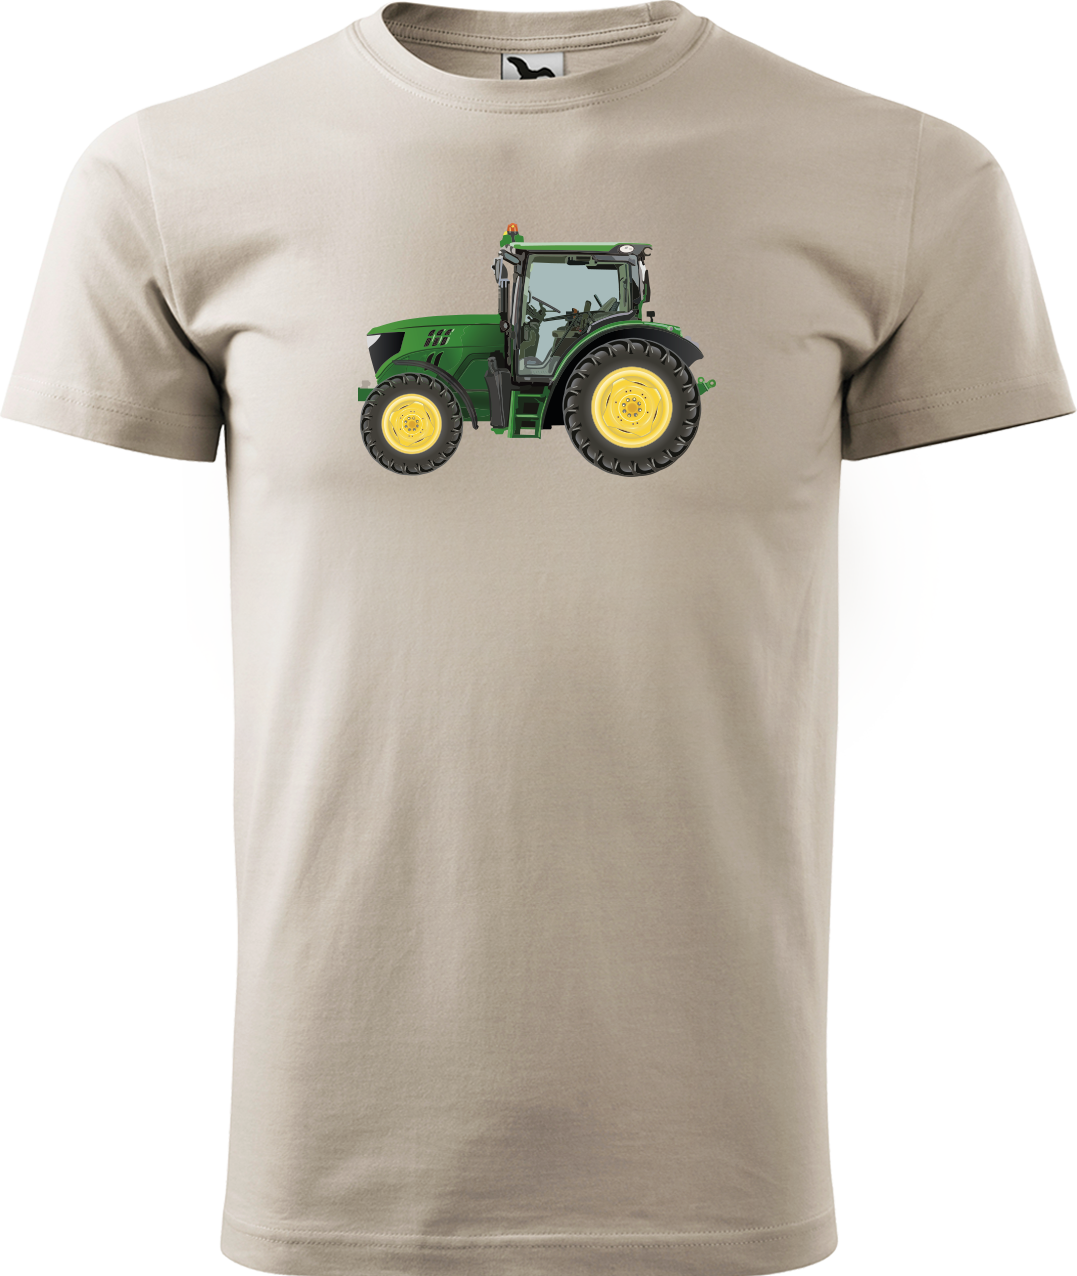 Tričko s traktorem - Zelený traktor Velikost: XL, Barva: Béžová (51)